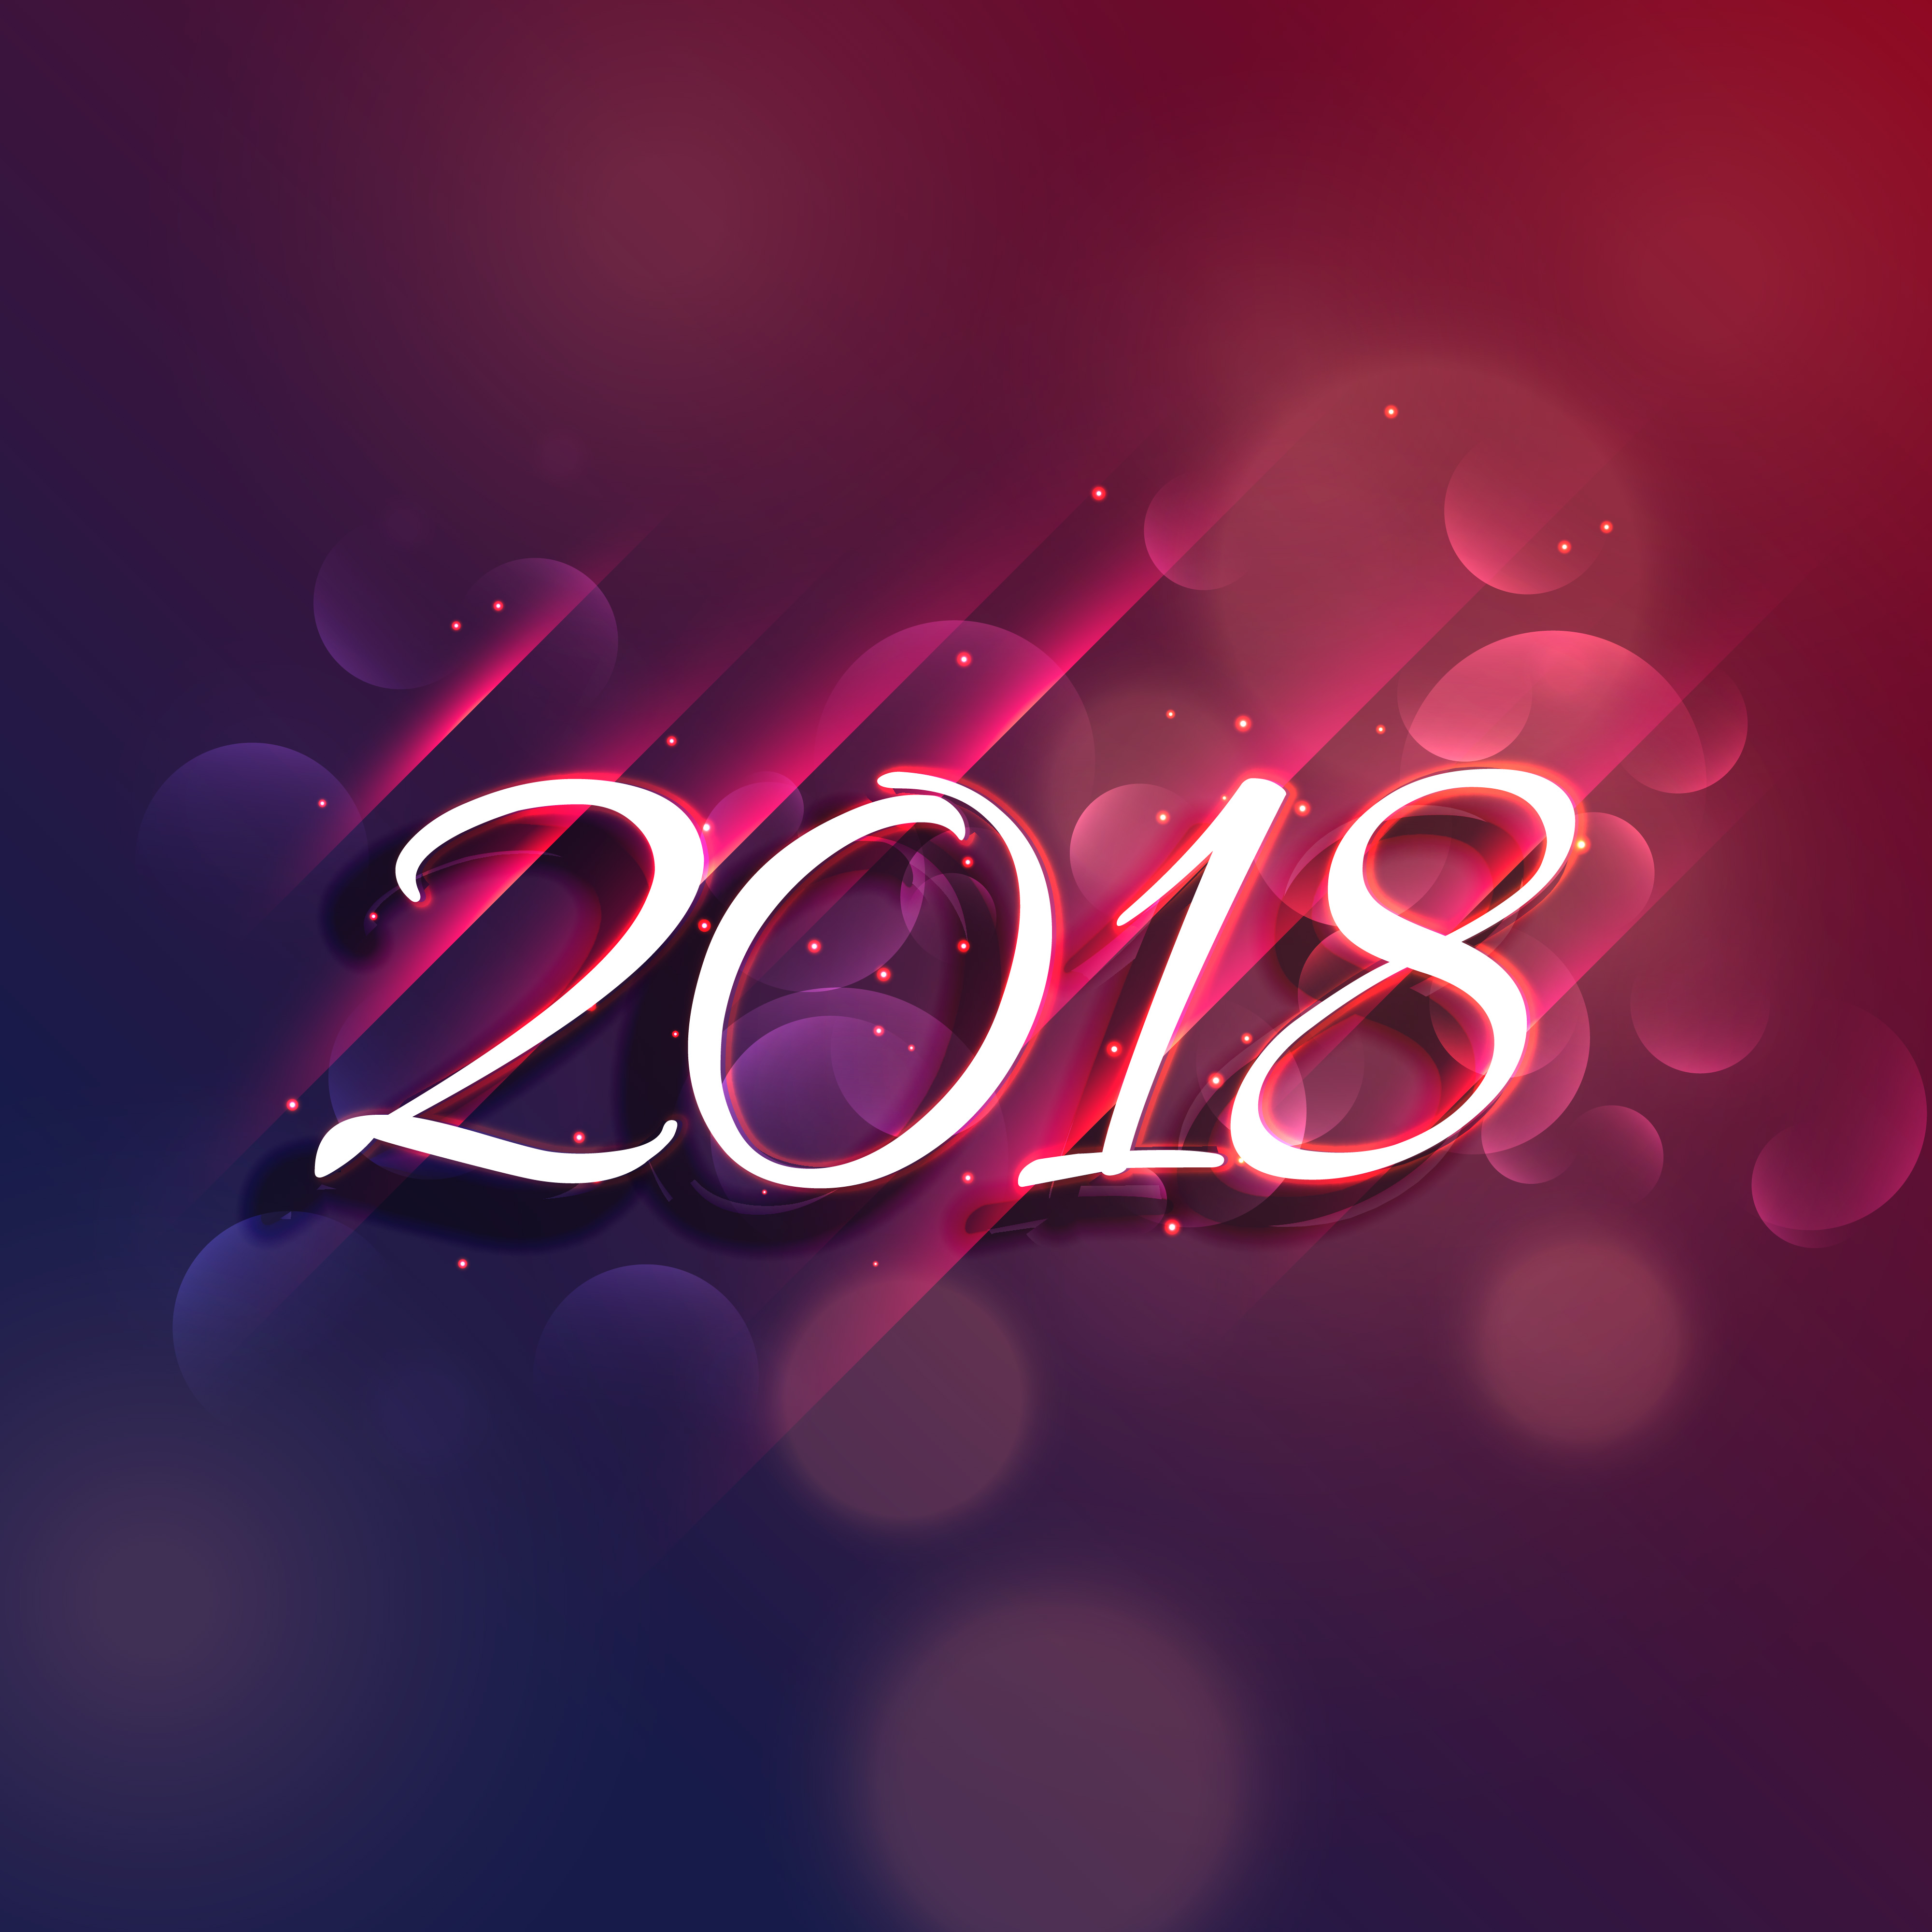 happy new year 2018 red golden background design 